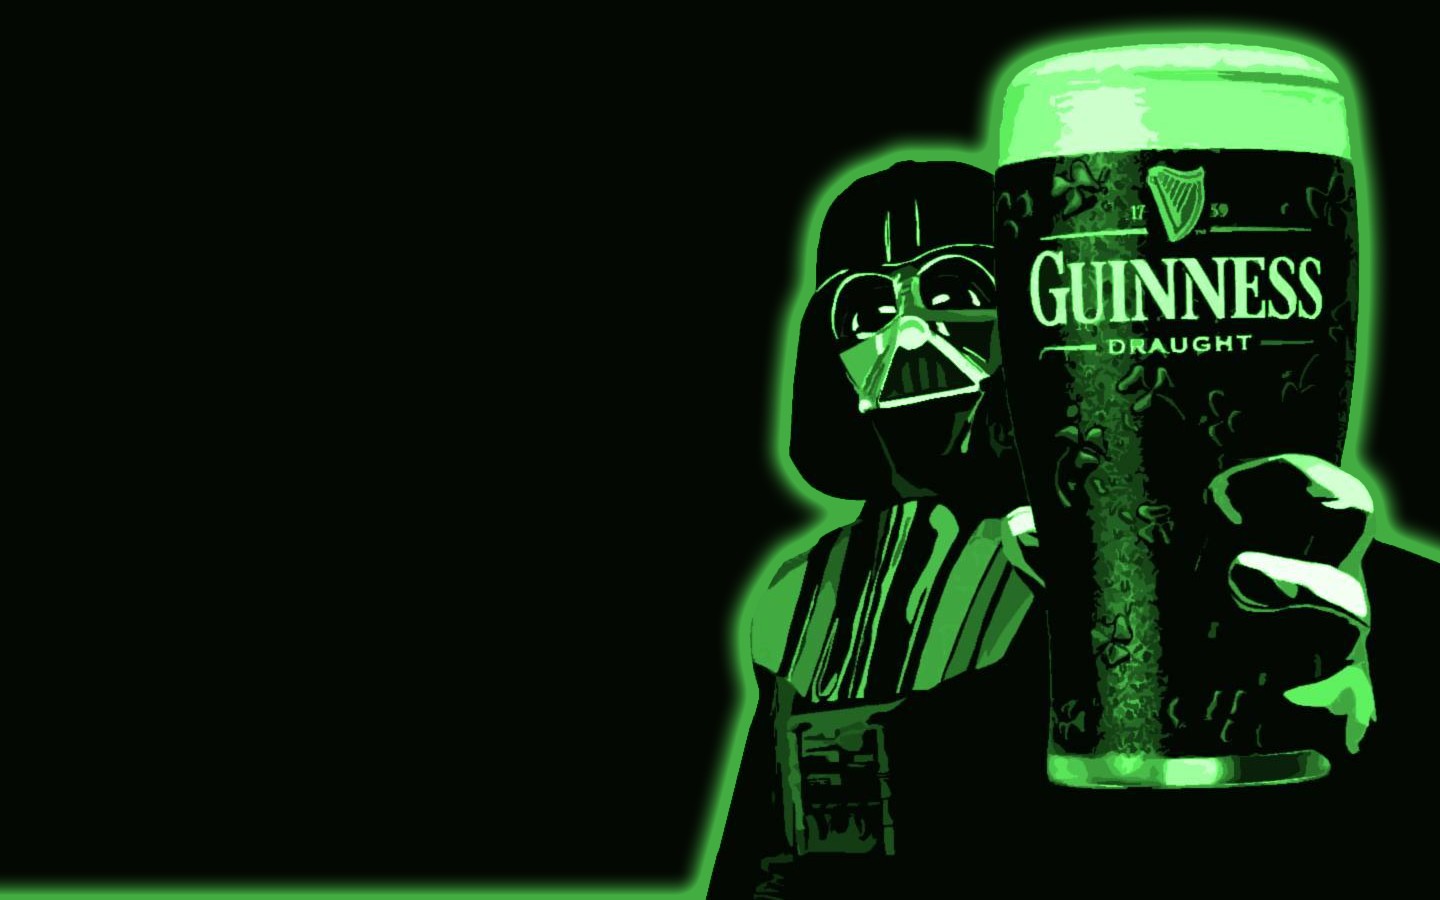 General 1440x900 beer Star Wars Darth Vader Guinness artwork green movie characters